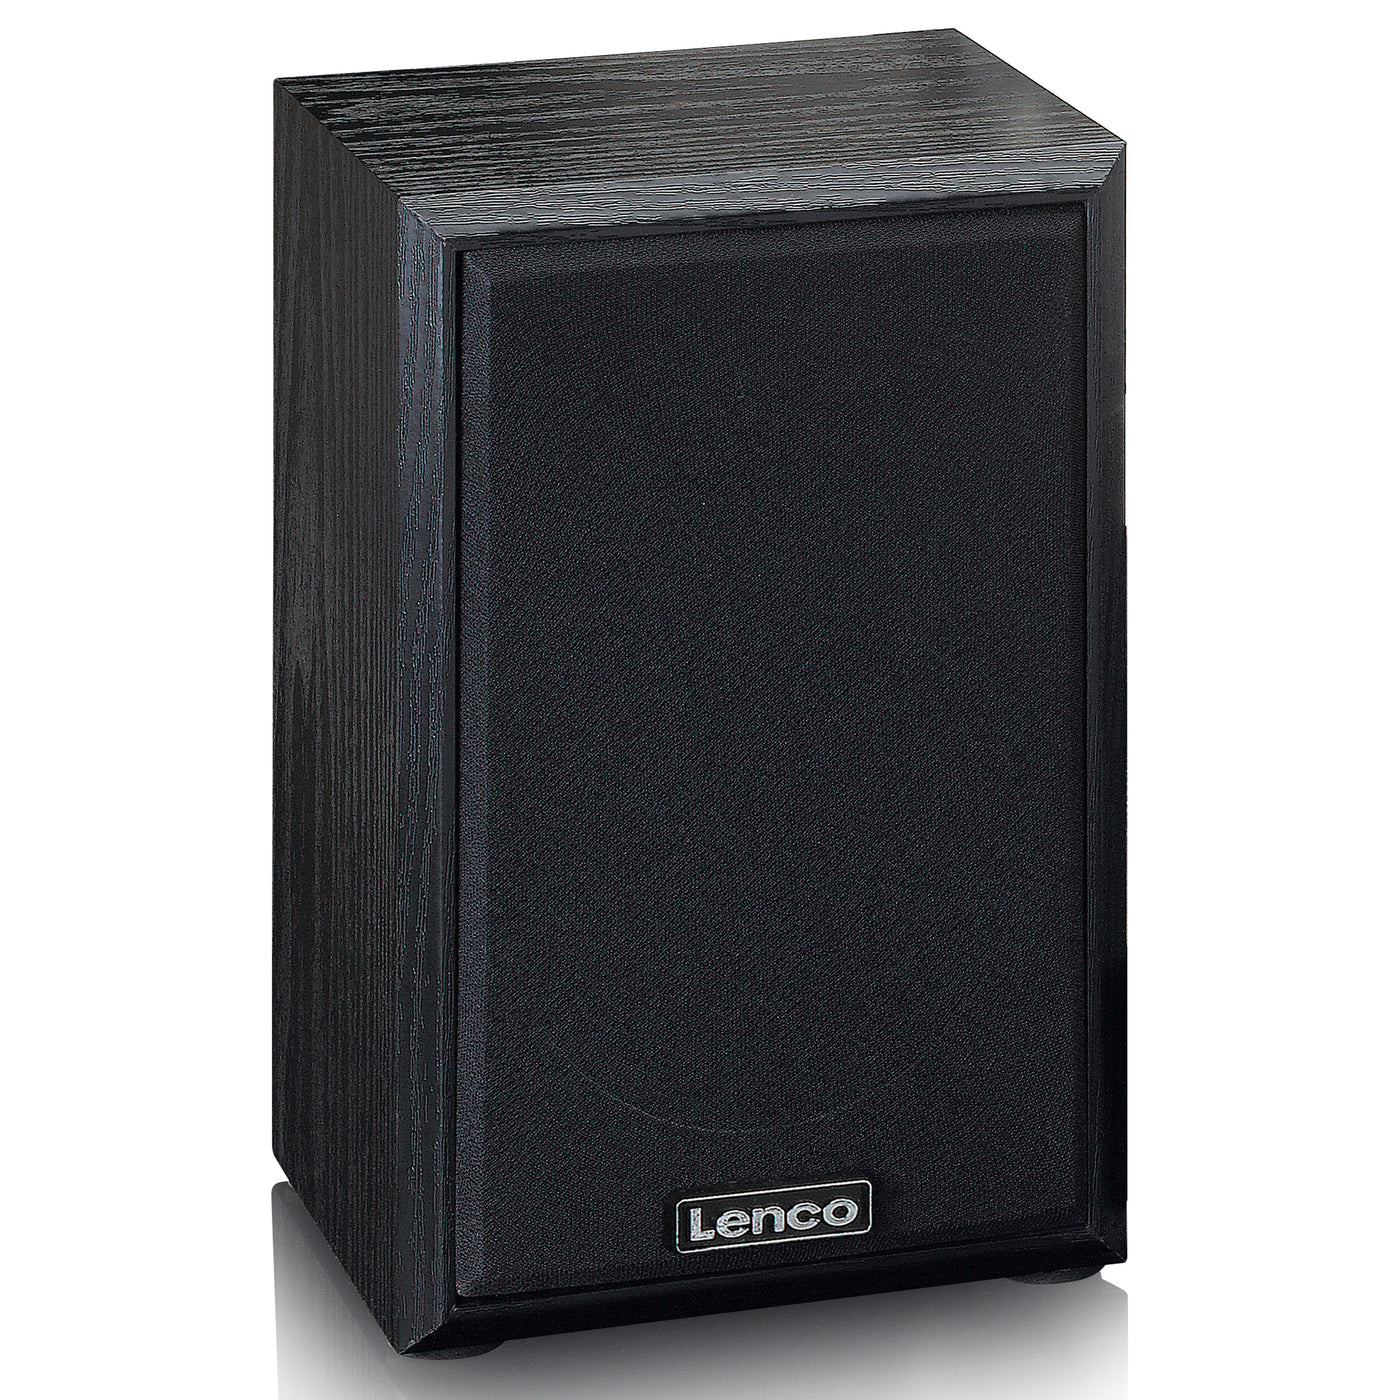 LENCO - LS-101BK - Belt drive wooden Record Player